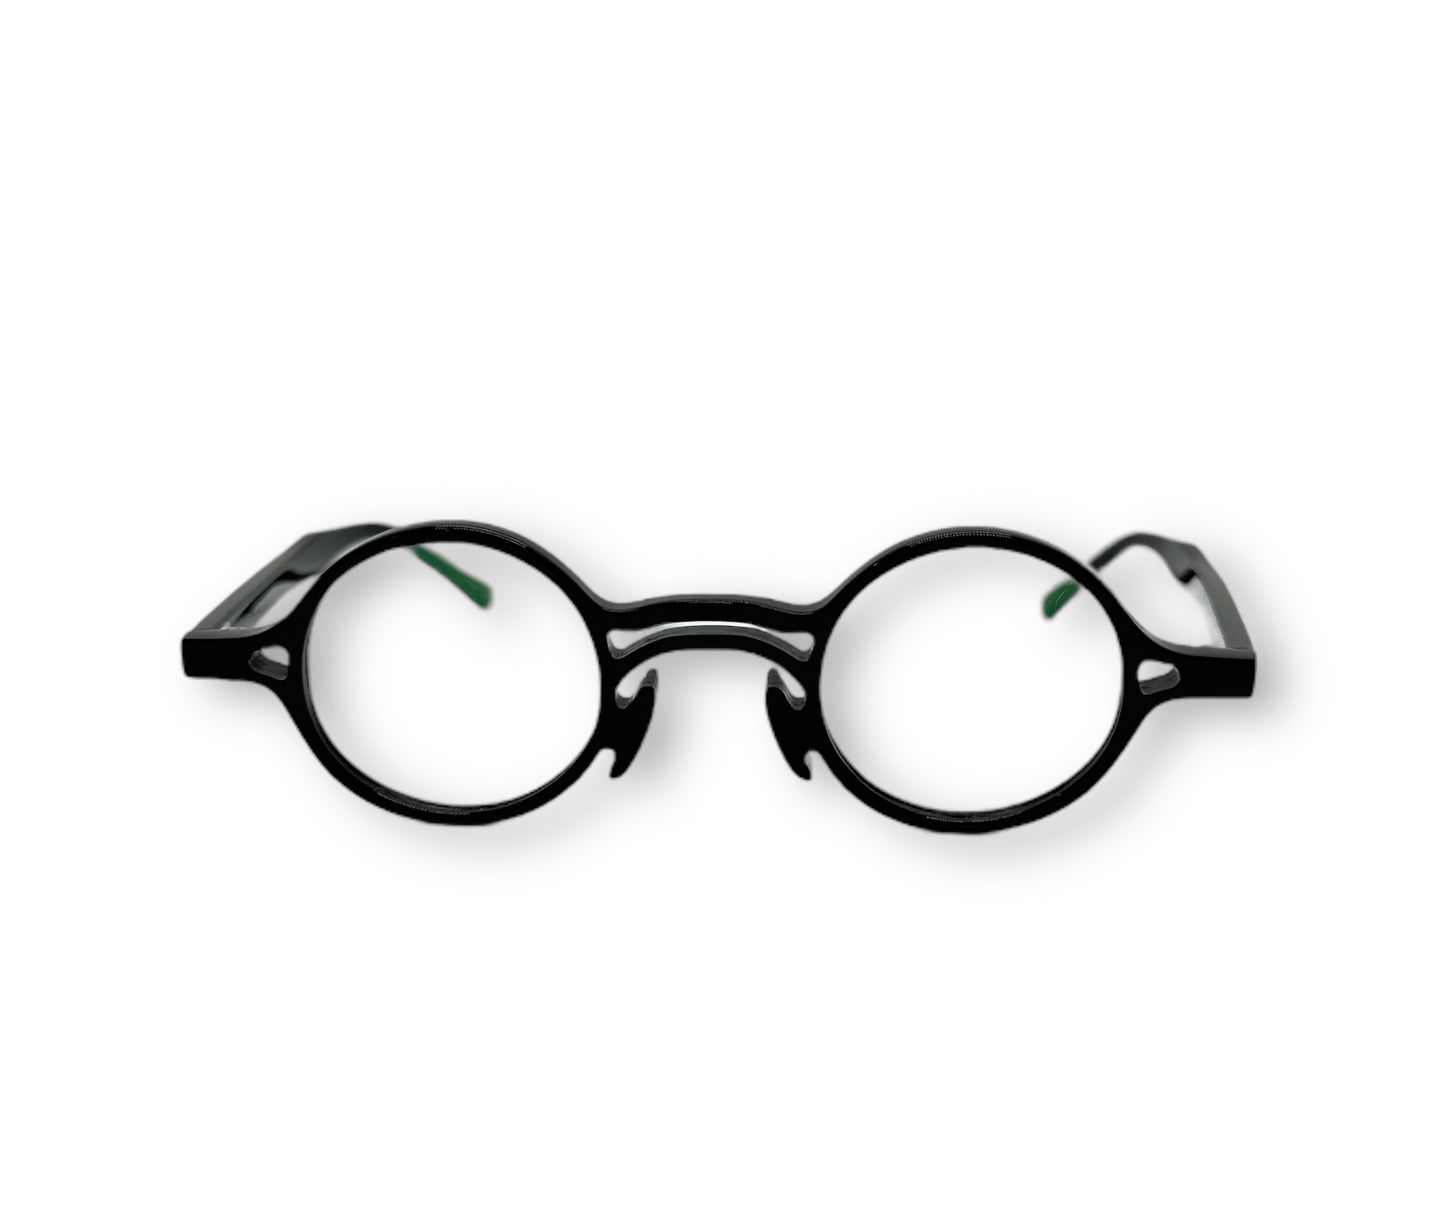 Corak Glasses G-15